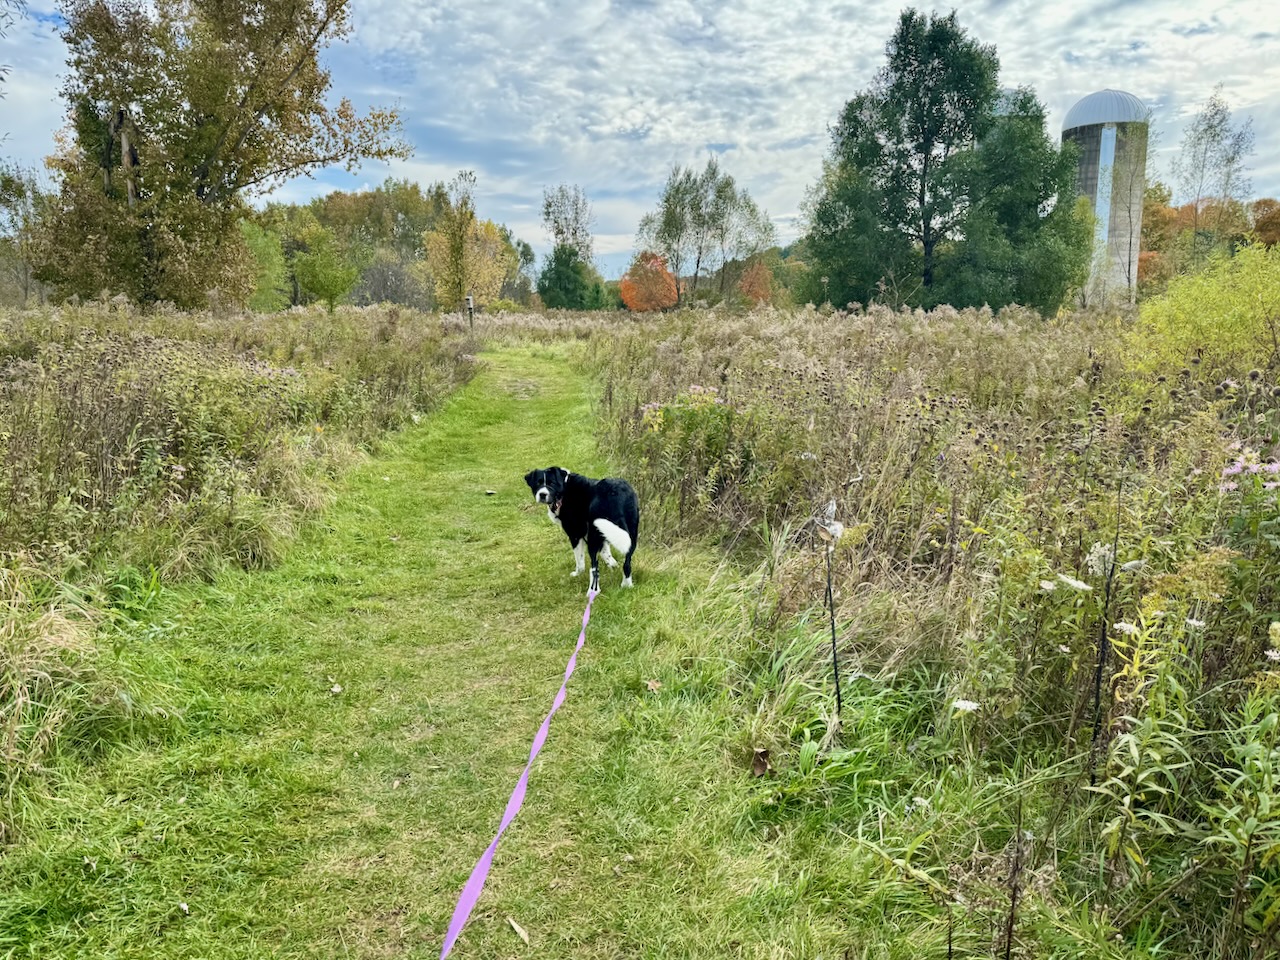 Dog walking on long leash down mowed path through field